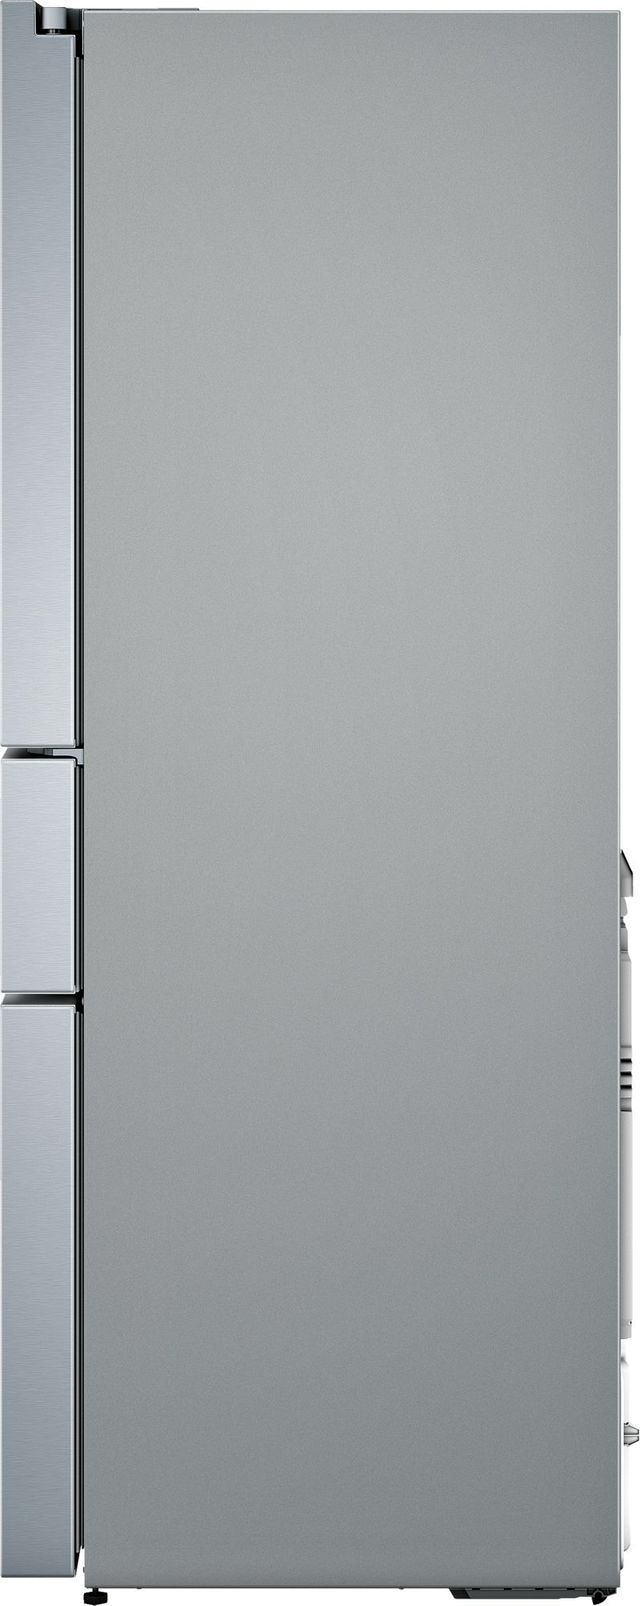 Bosch 800 Series 20.5 Cu. Ft. Stainless Steel Counter Depth French Door Refrigerator 6